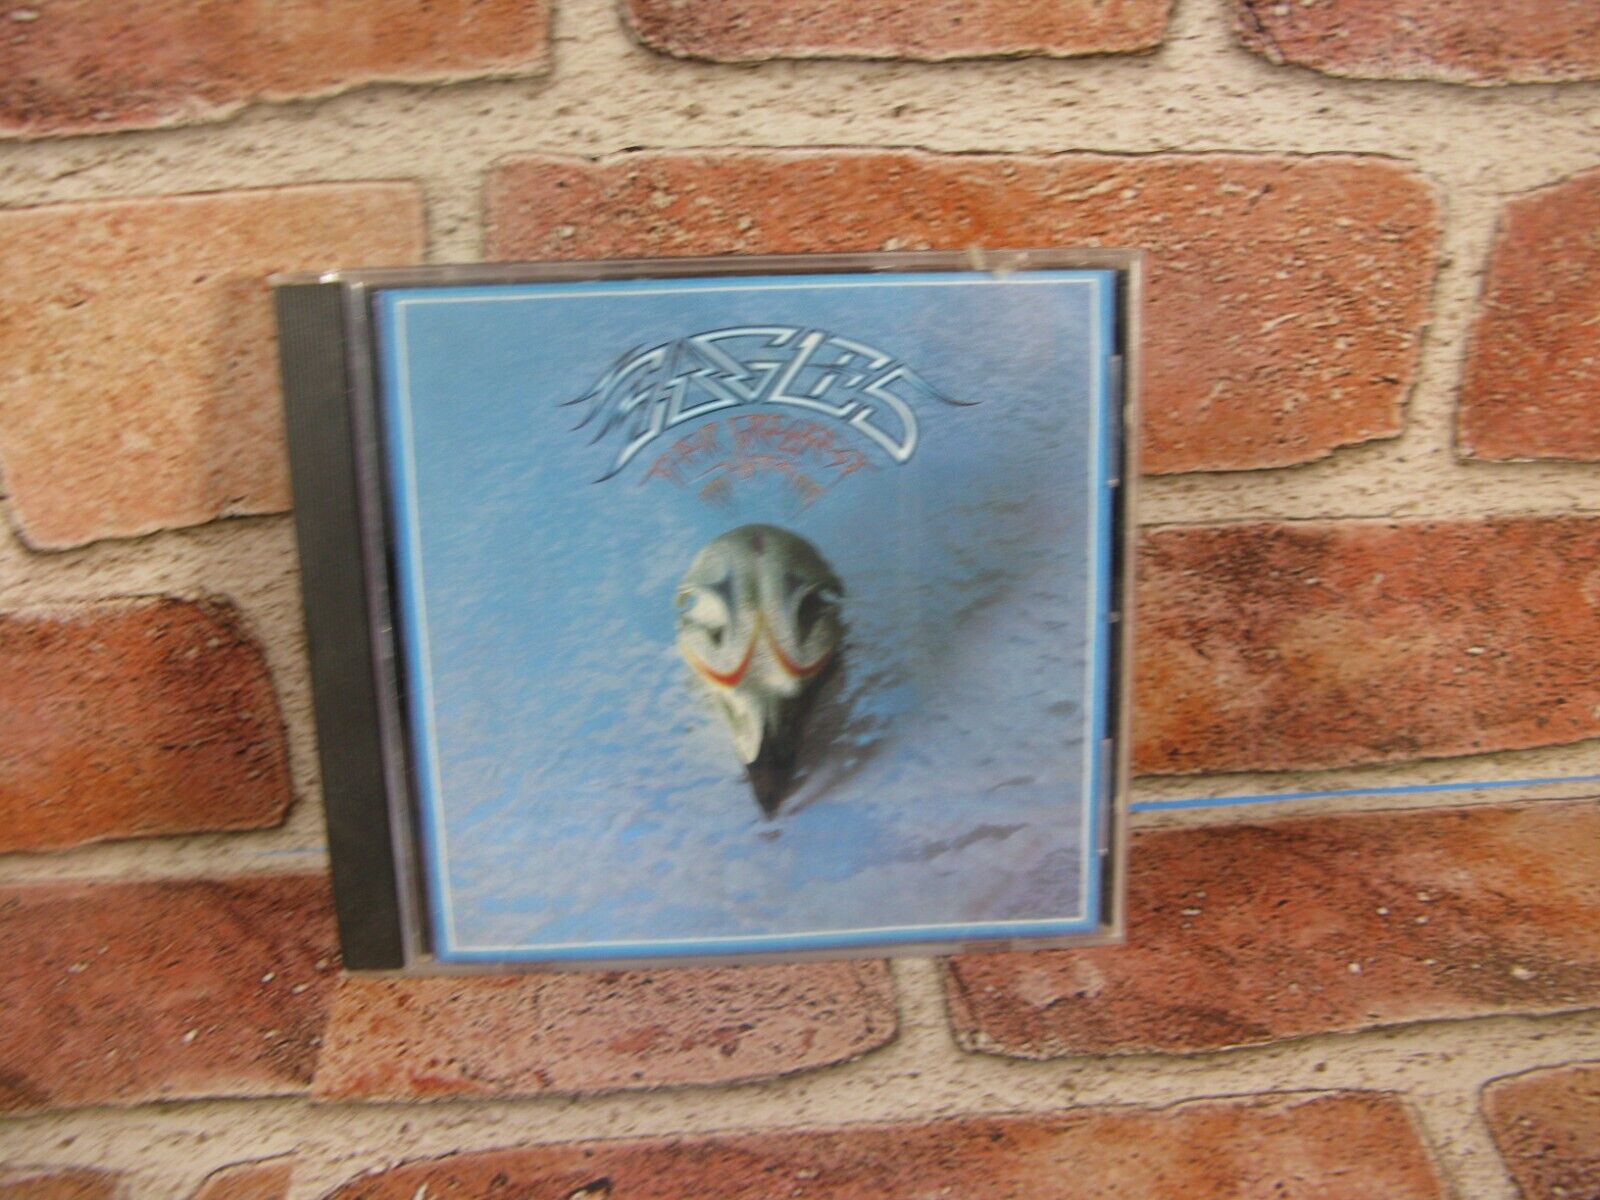 Eagles Their Greatest Hits 1971-1975 CD EARLY JVC PRESS Asylum E2-105 Joe Walsh